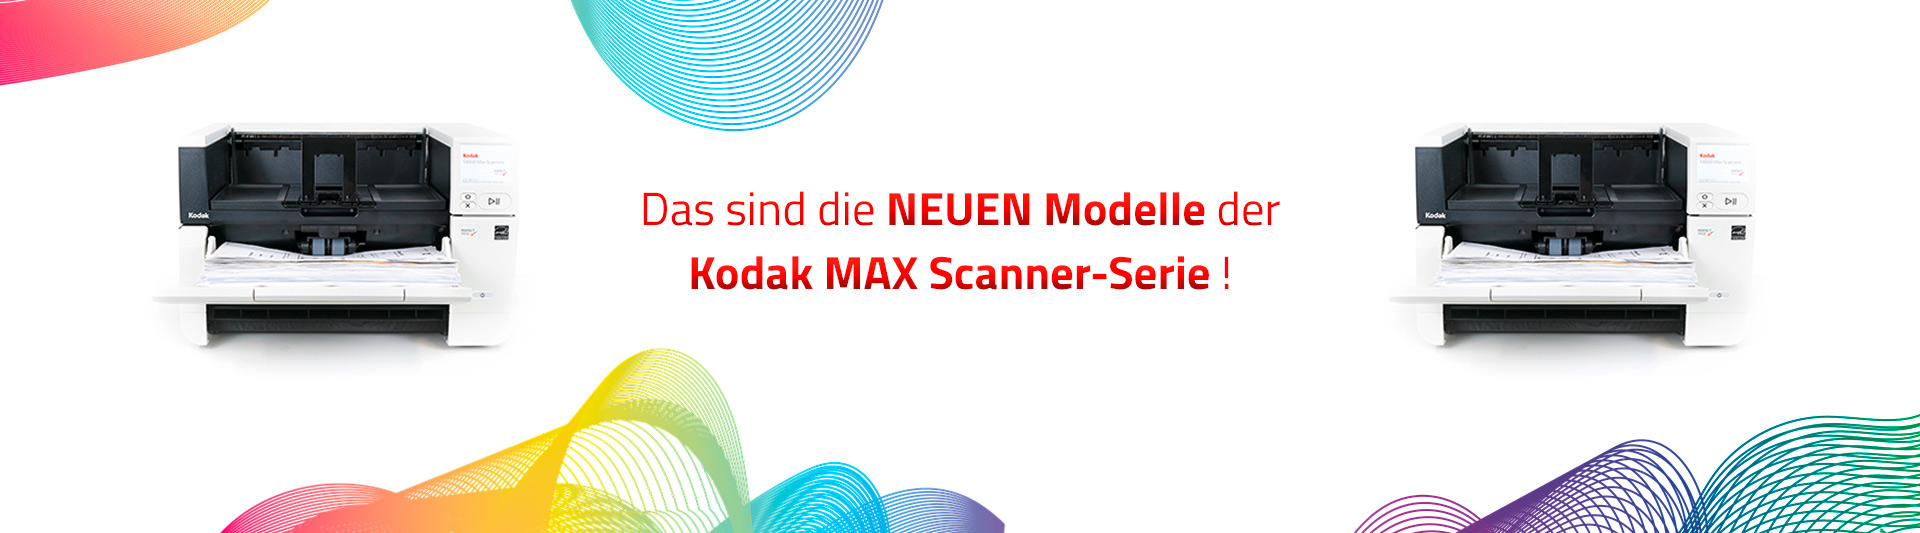 Beitragsbild Kodak Scanner-Serie MAX